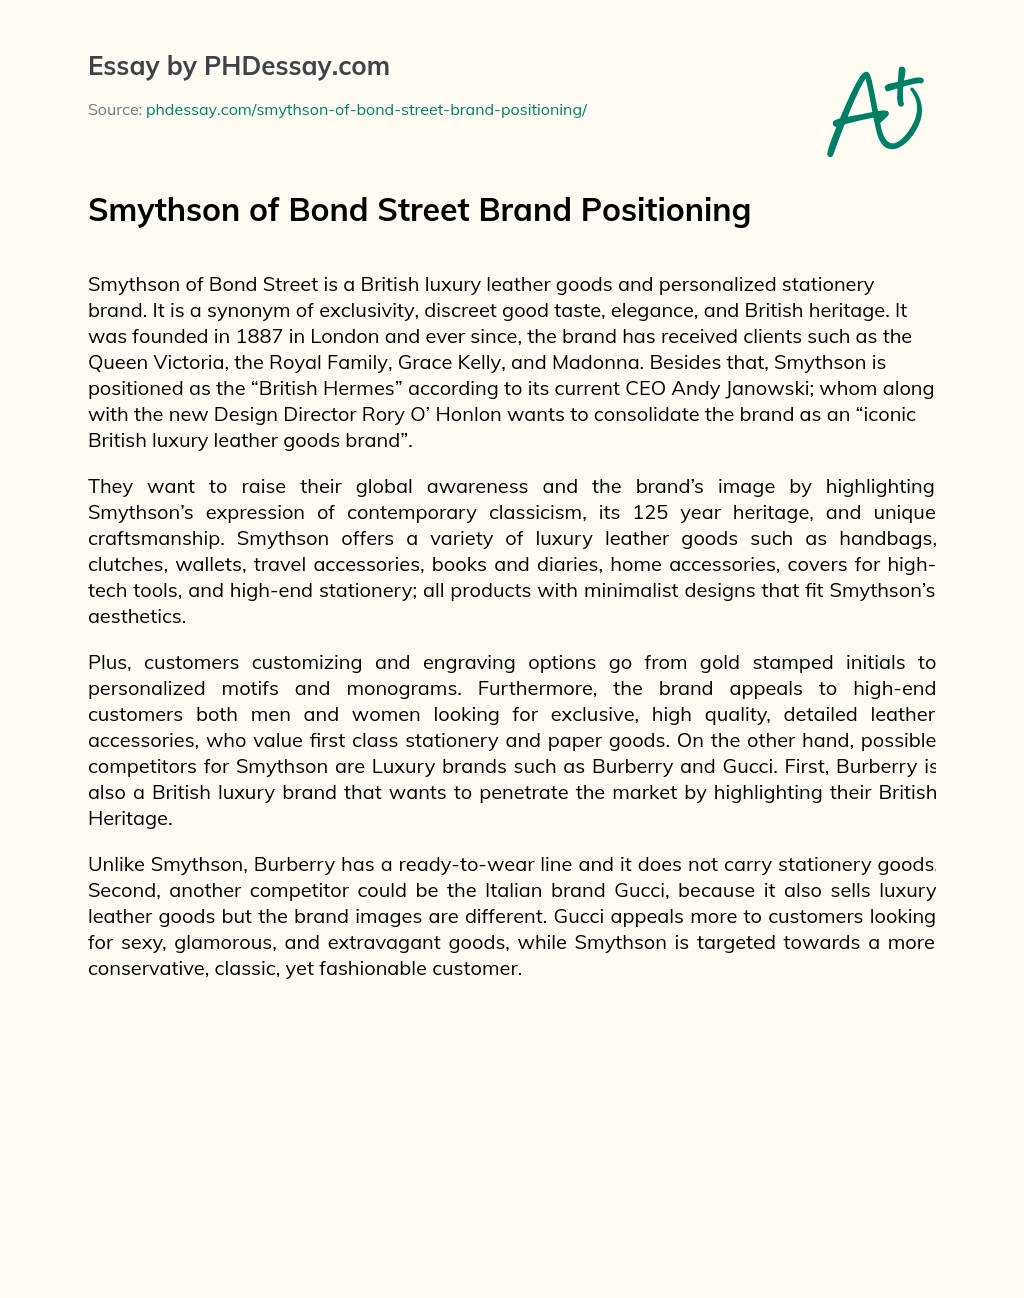 Smythson of Bond Street Brand Positioning essay